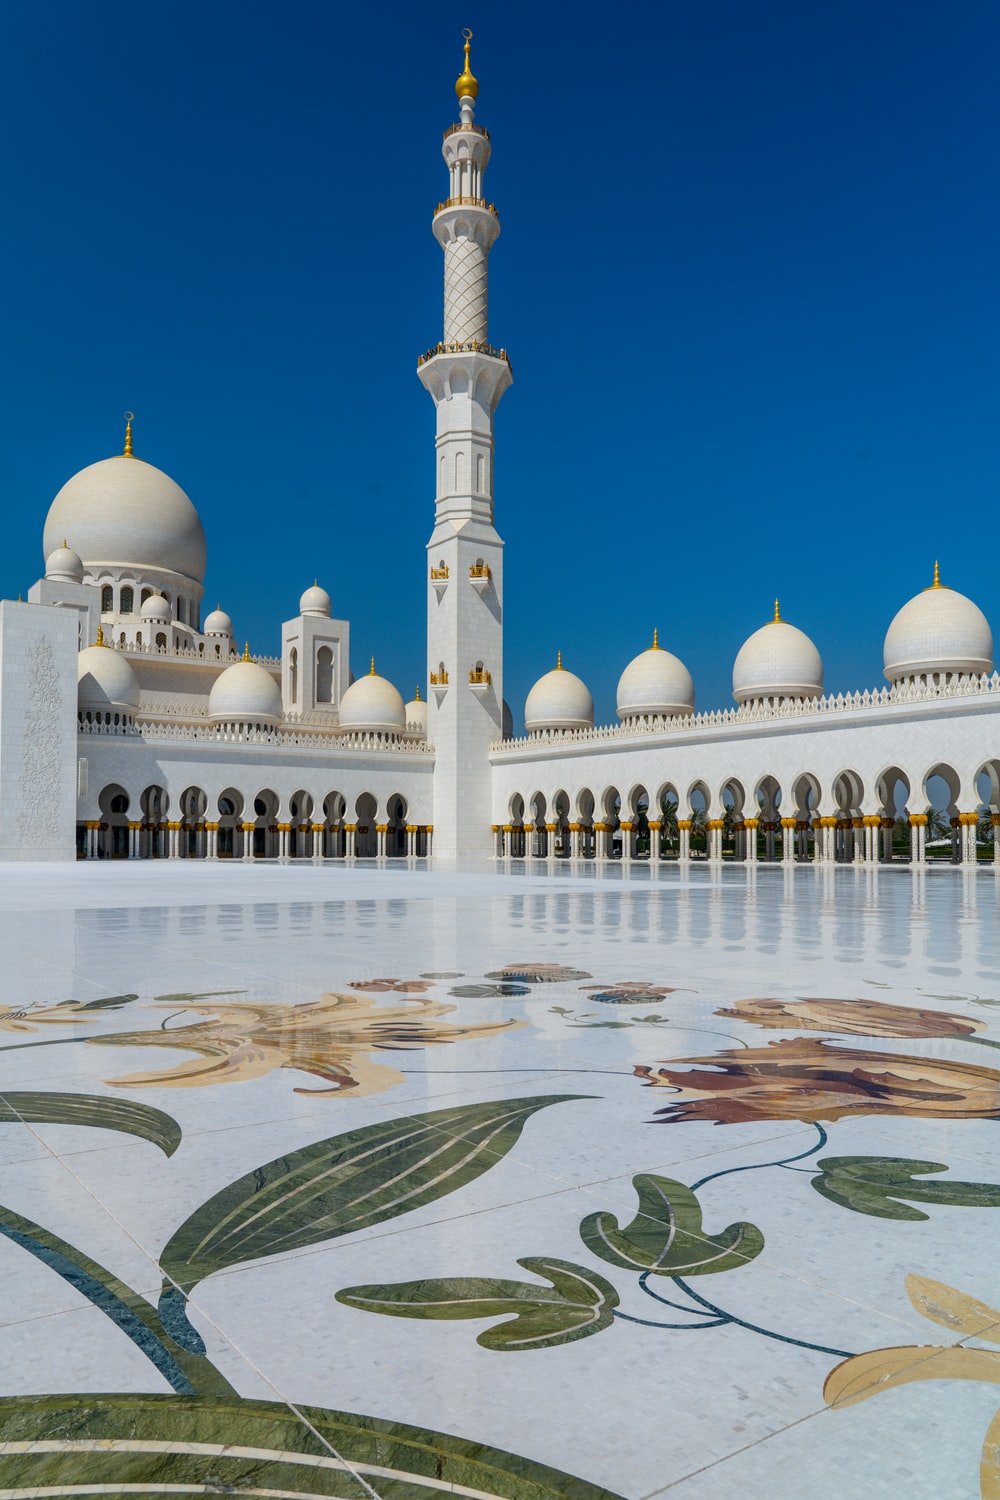 Beautiful Islamic Wallpapers